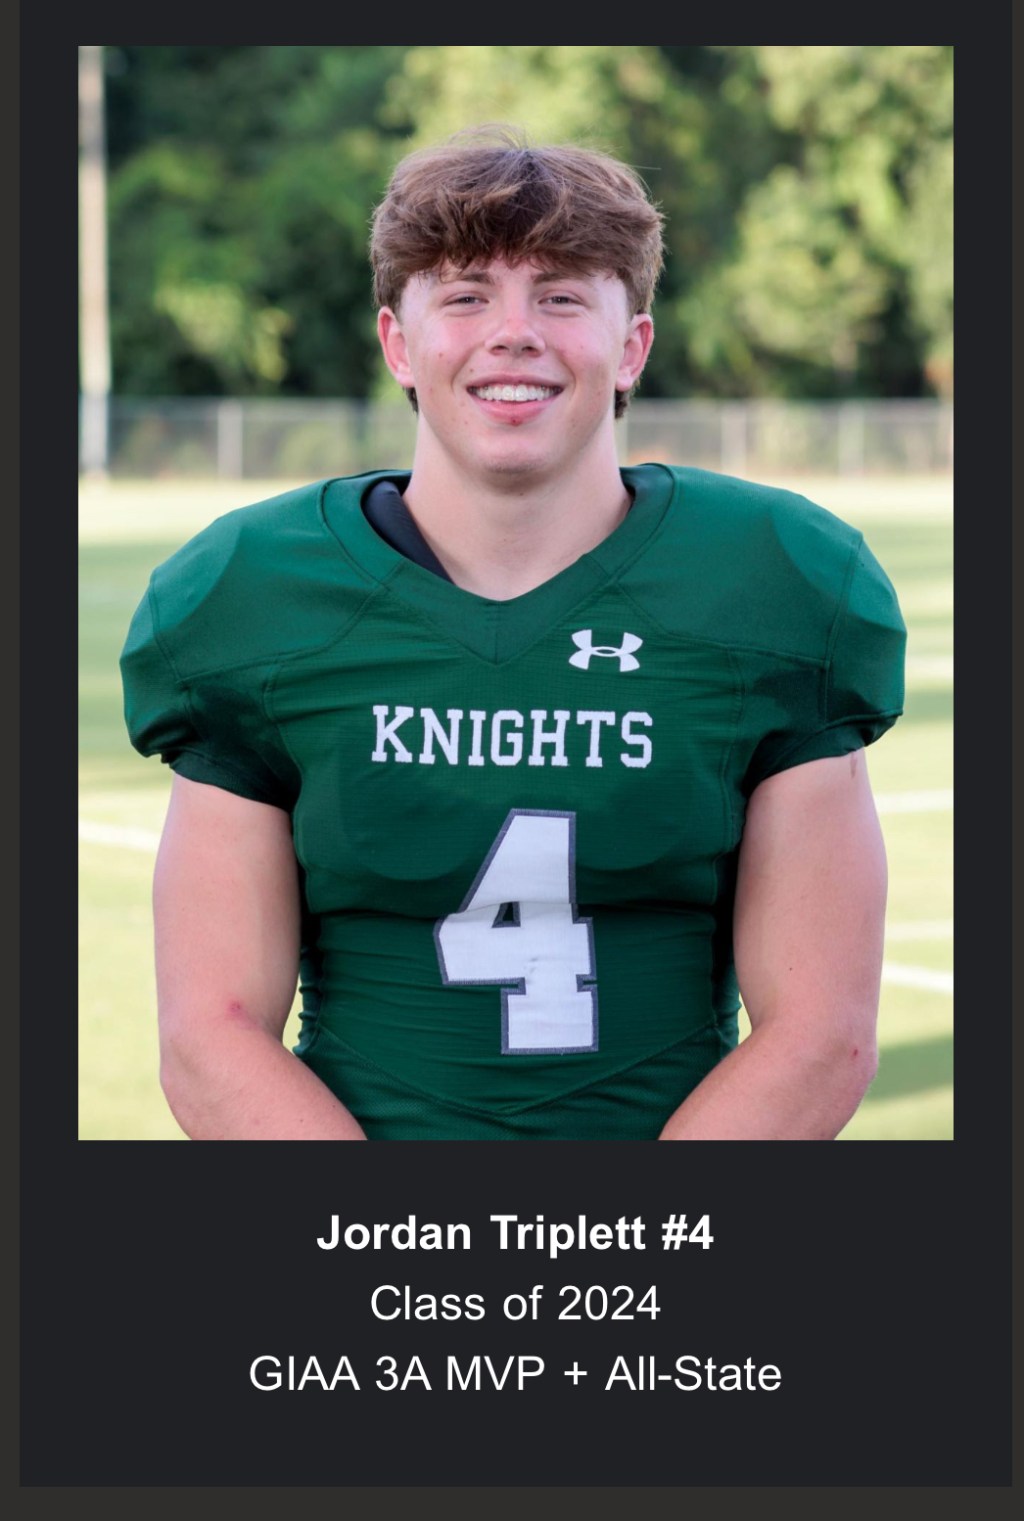 Jordan Triplett